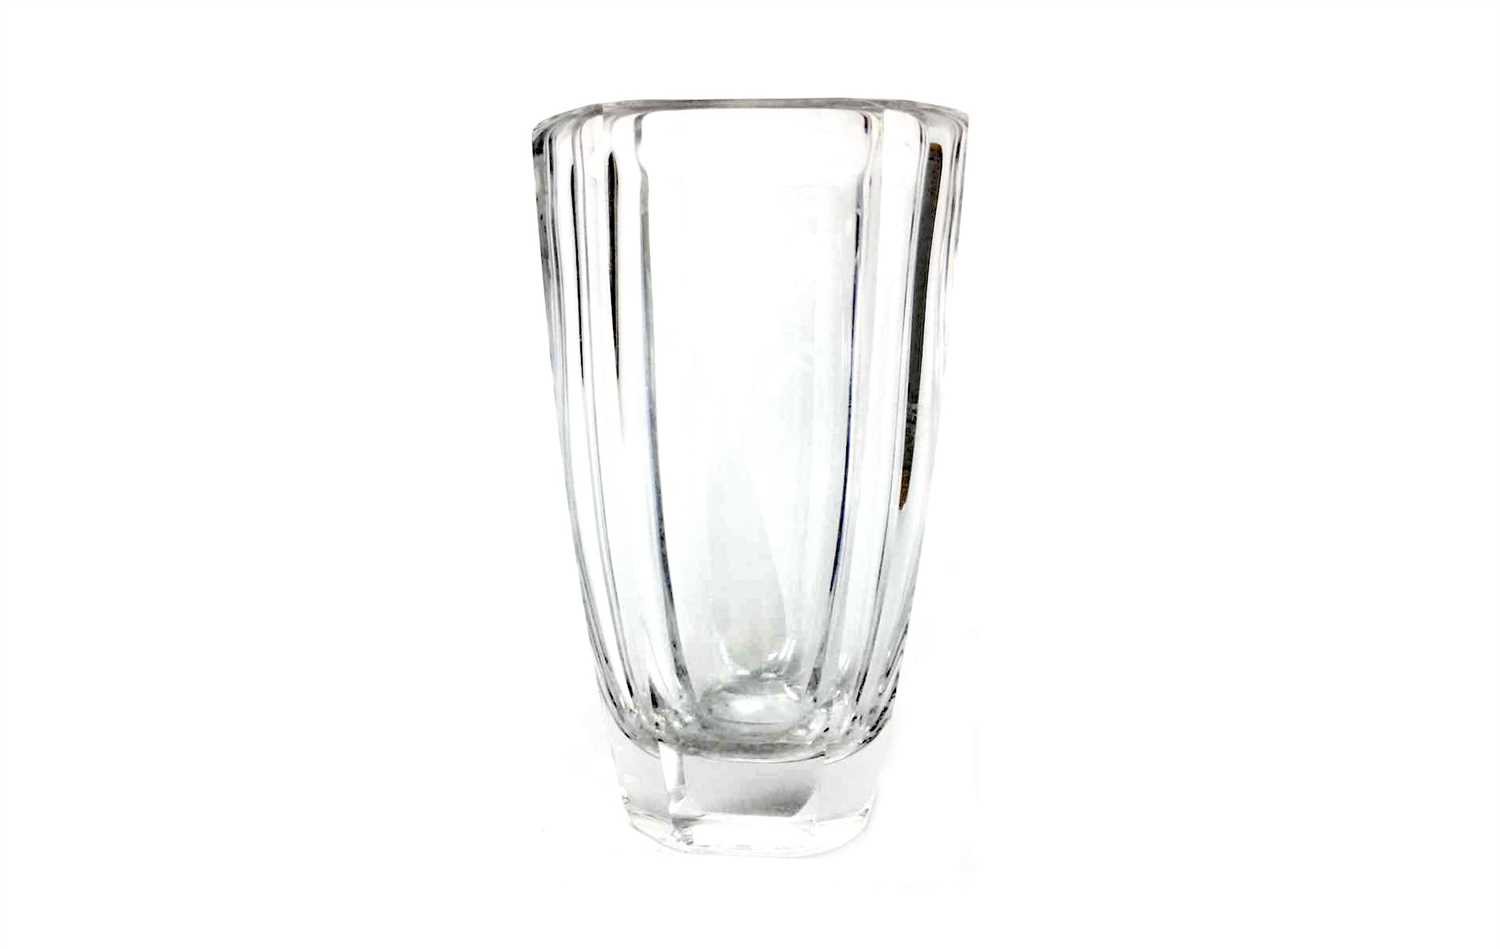 Lot 338 - AN ORREFORS GLASS VASE BY SVEN PALMQVIST